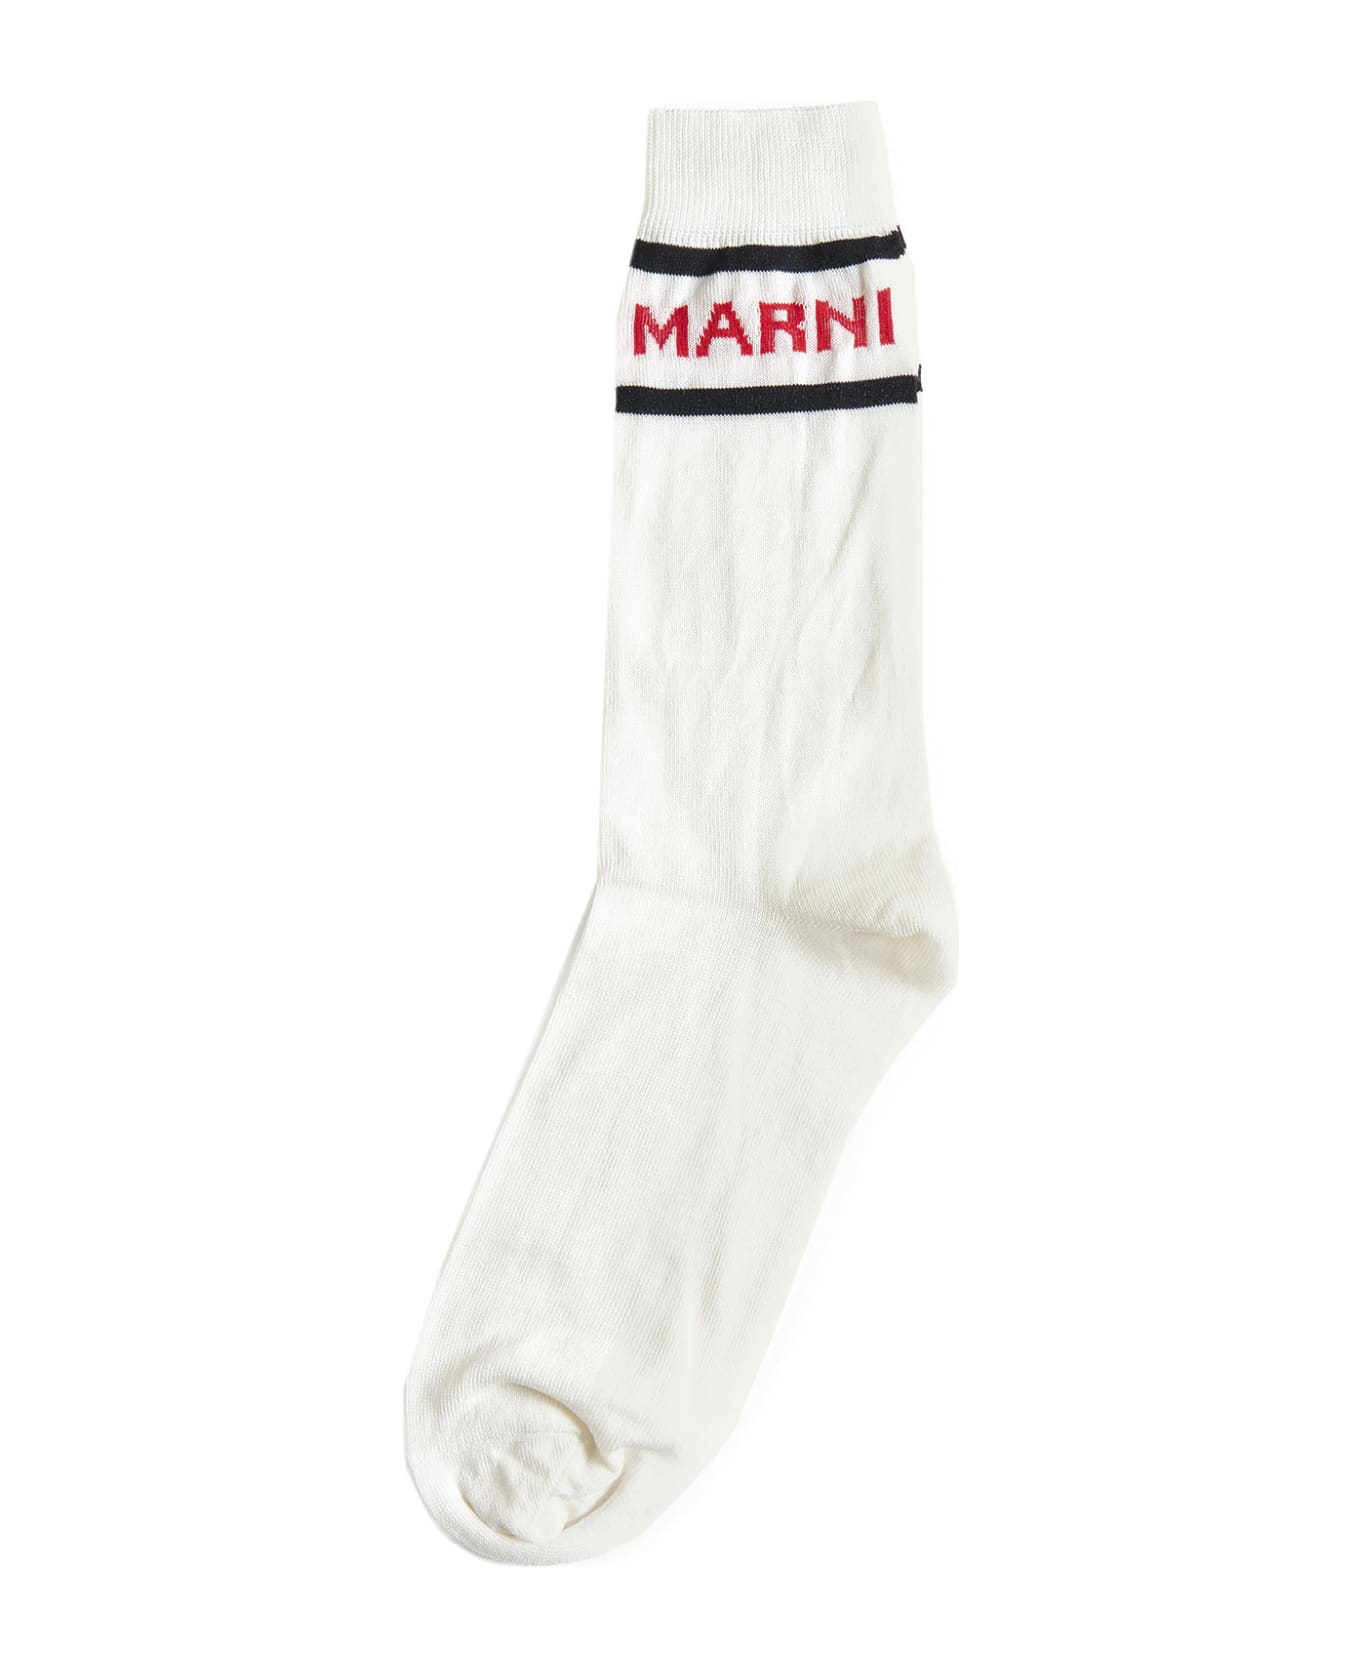 Marni Socks - Lily white 靴下